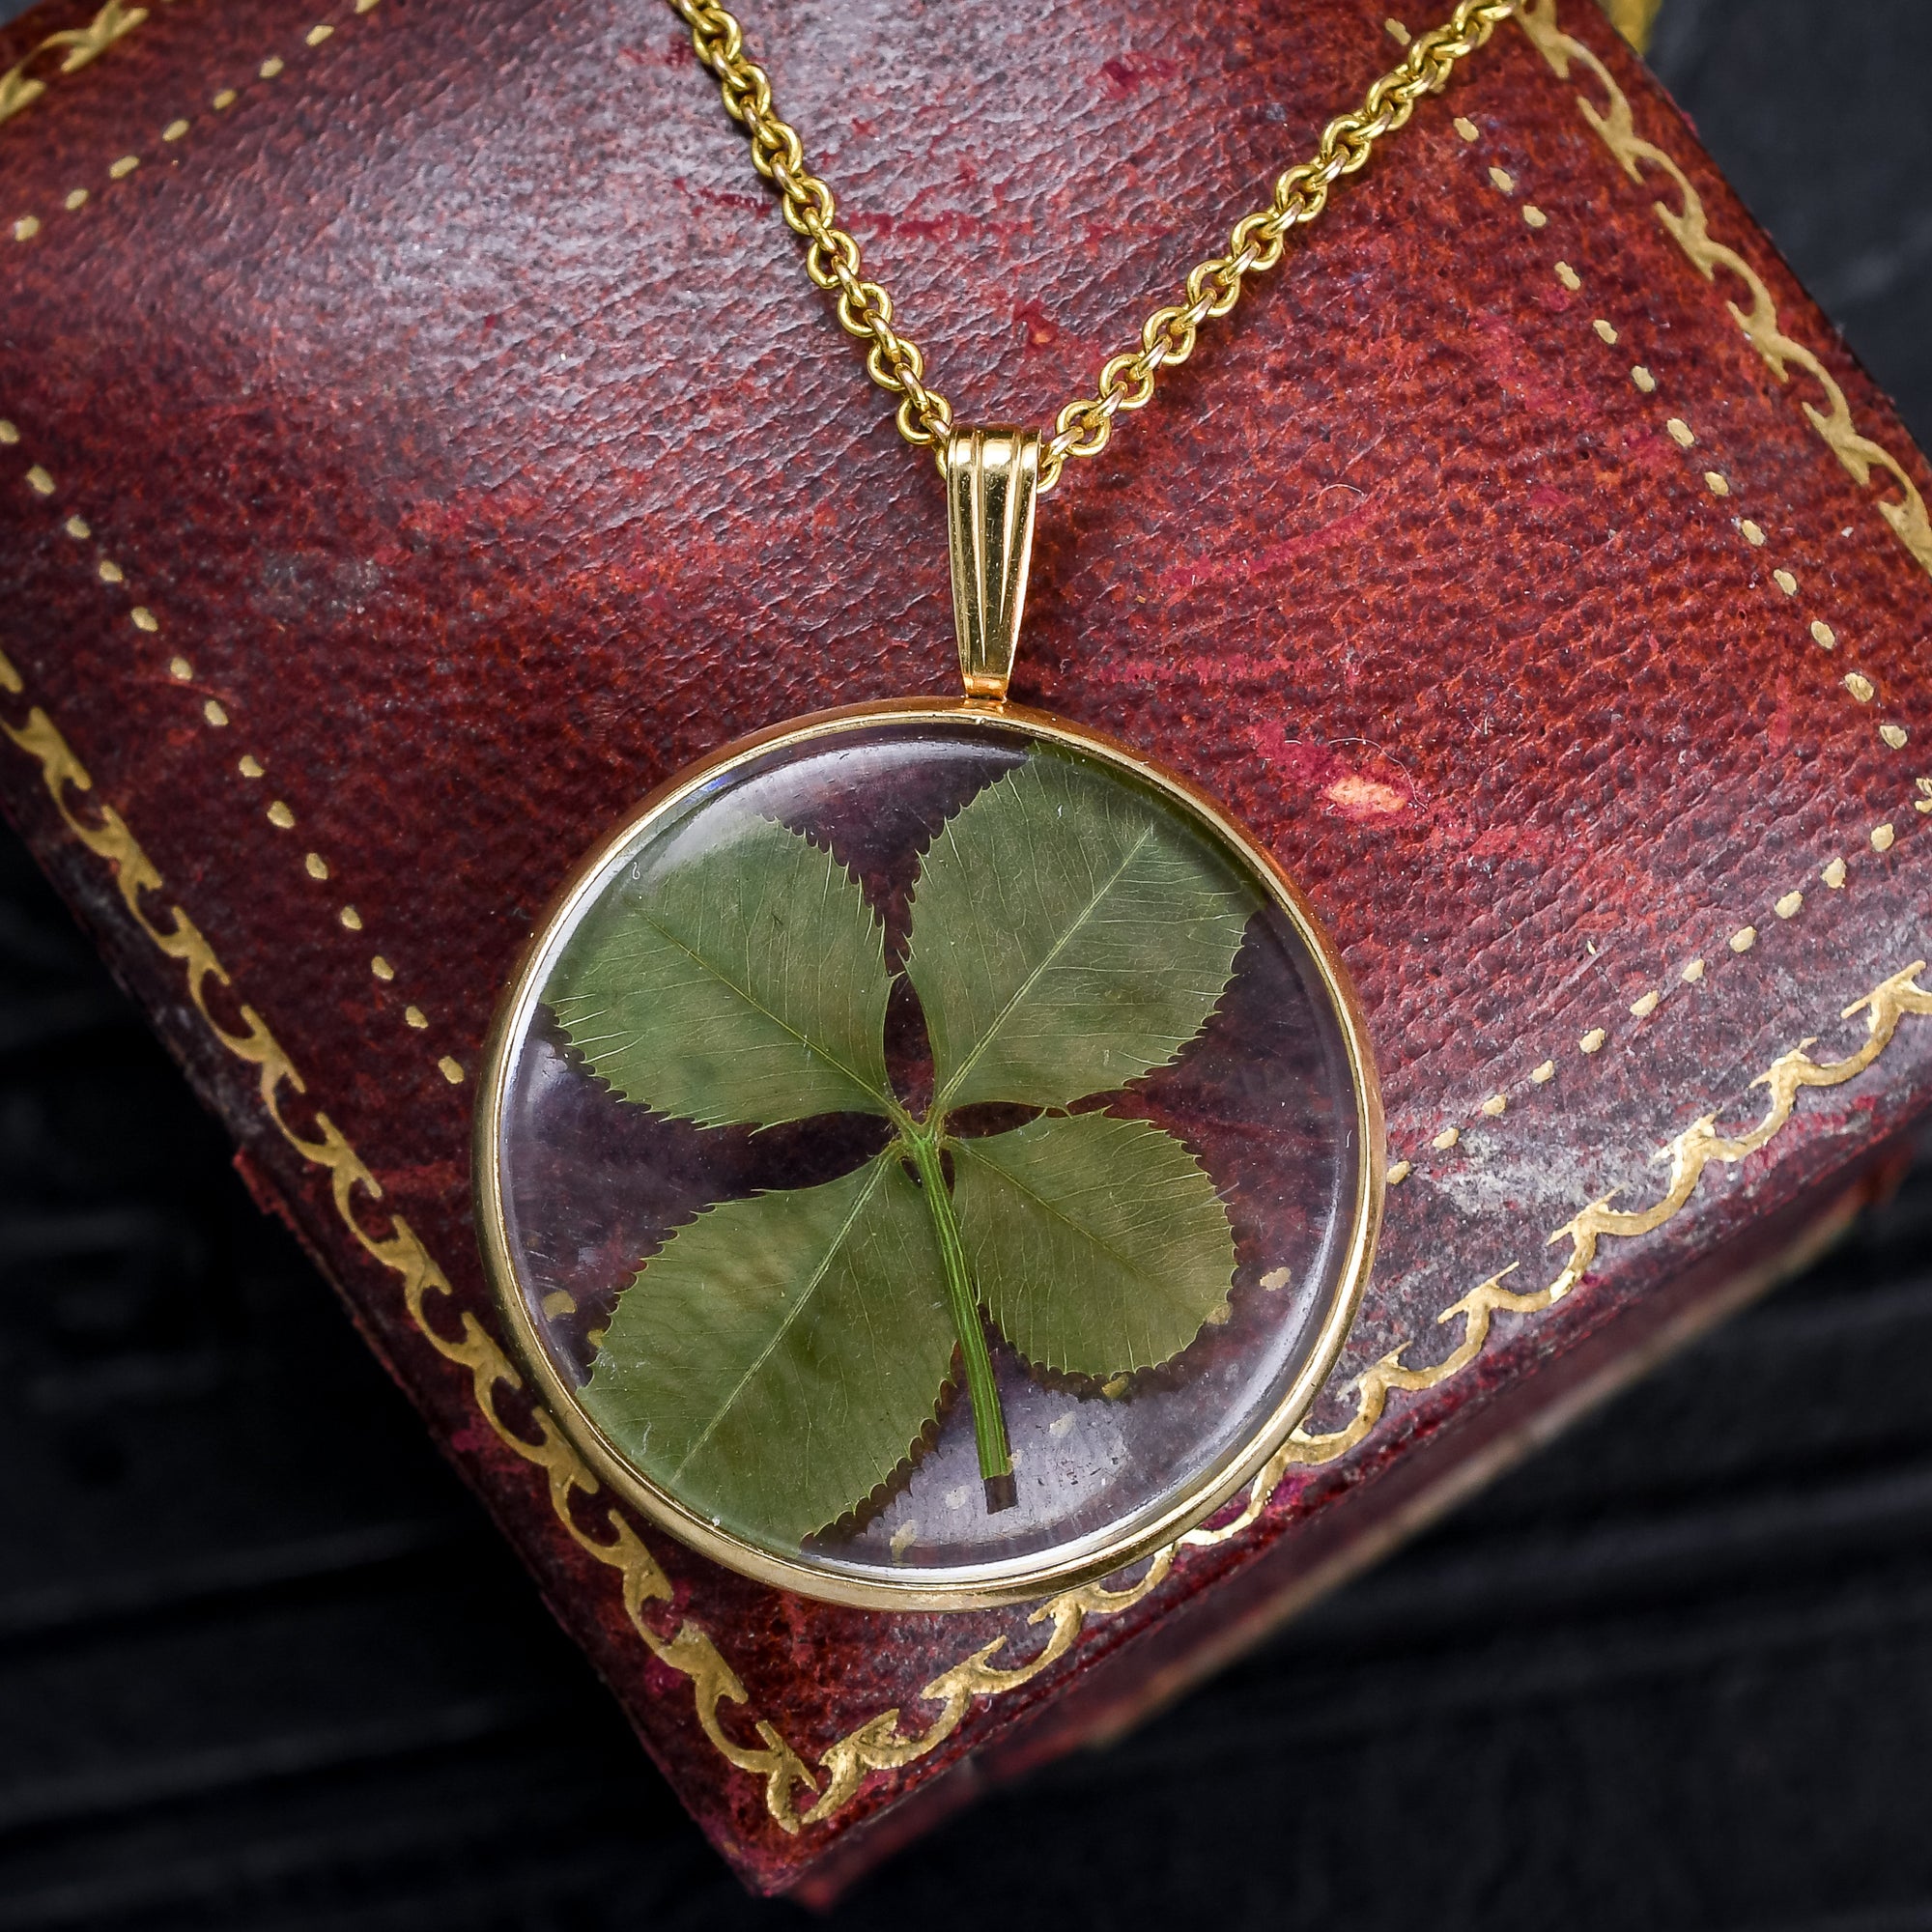 diamond four leaf clover necklace - lenawald